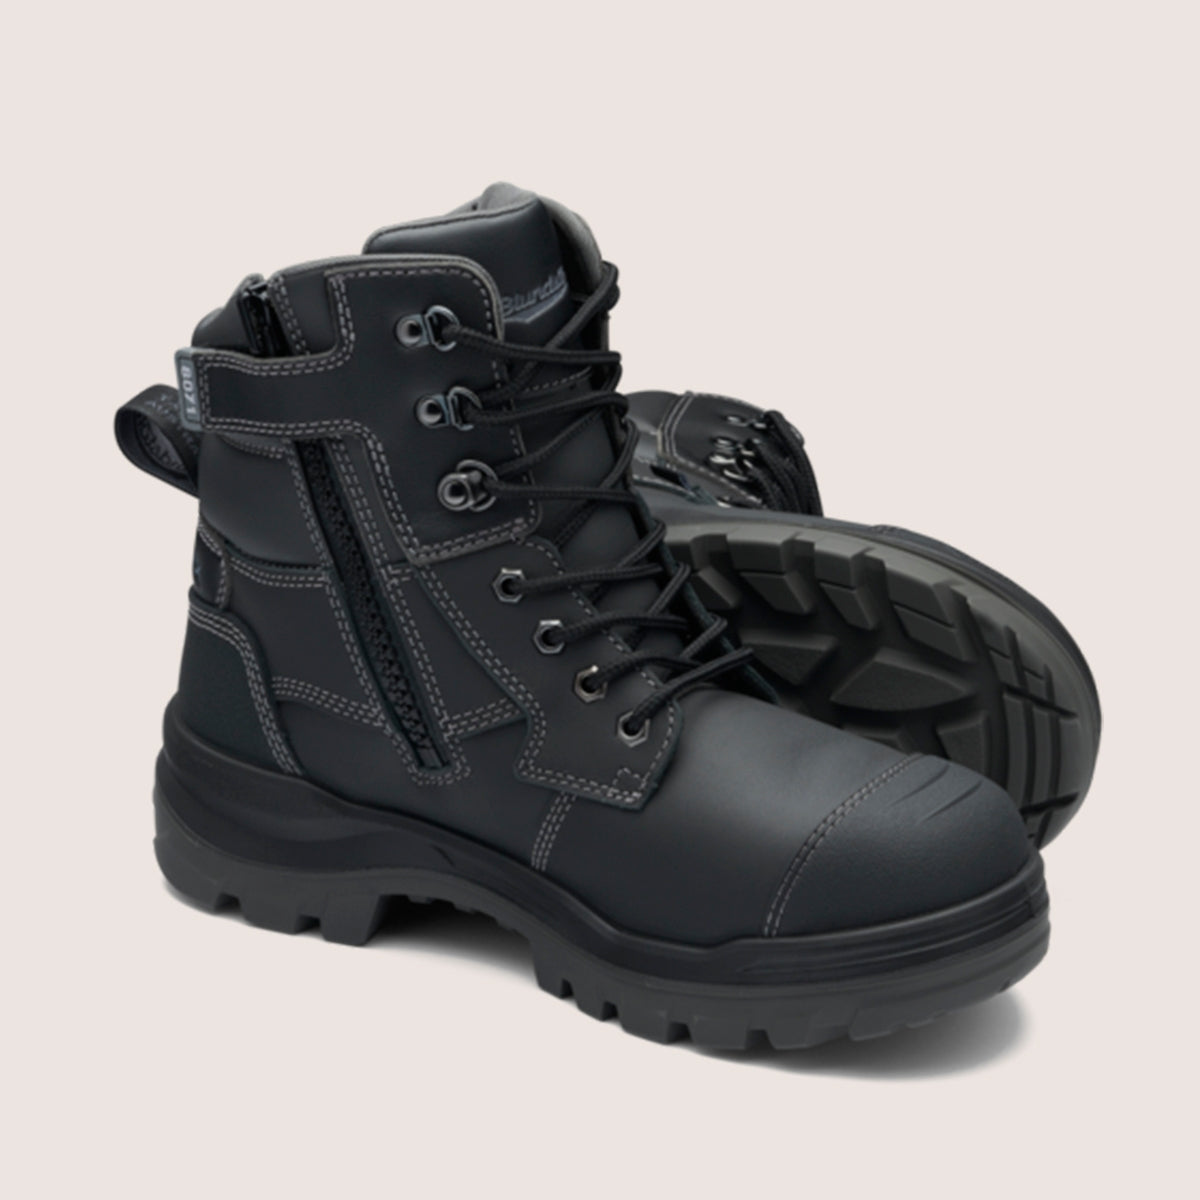 Rotoflex Safety Boots 